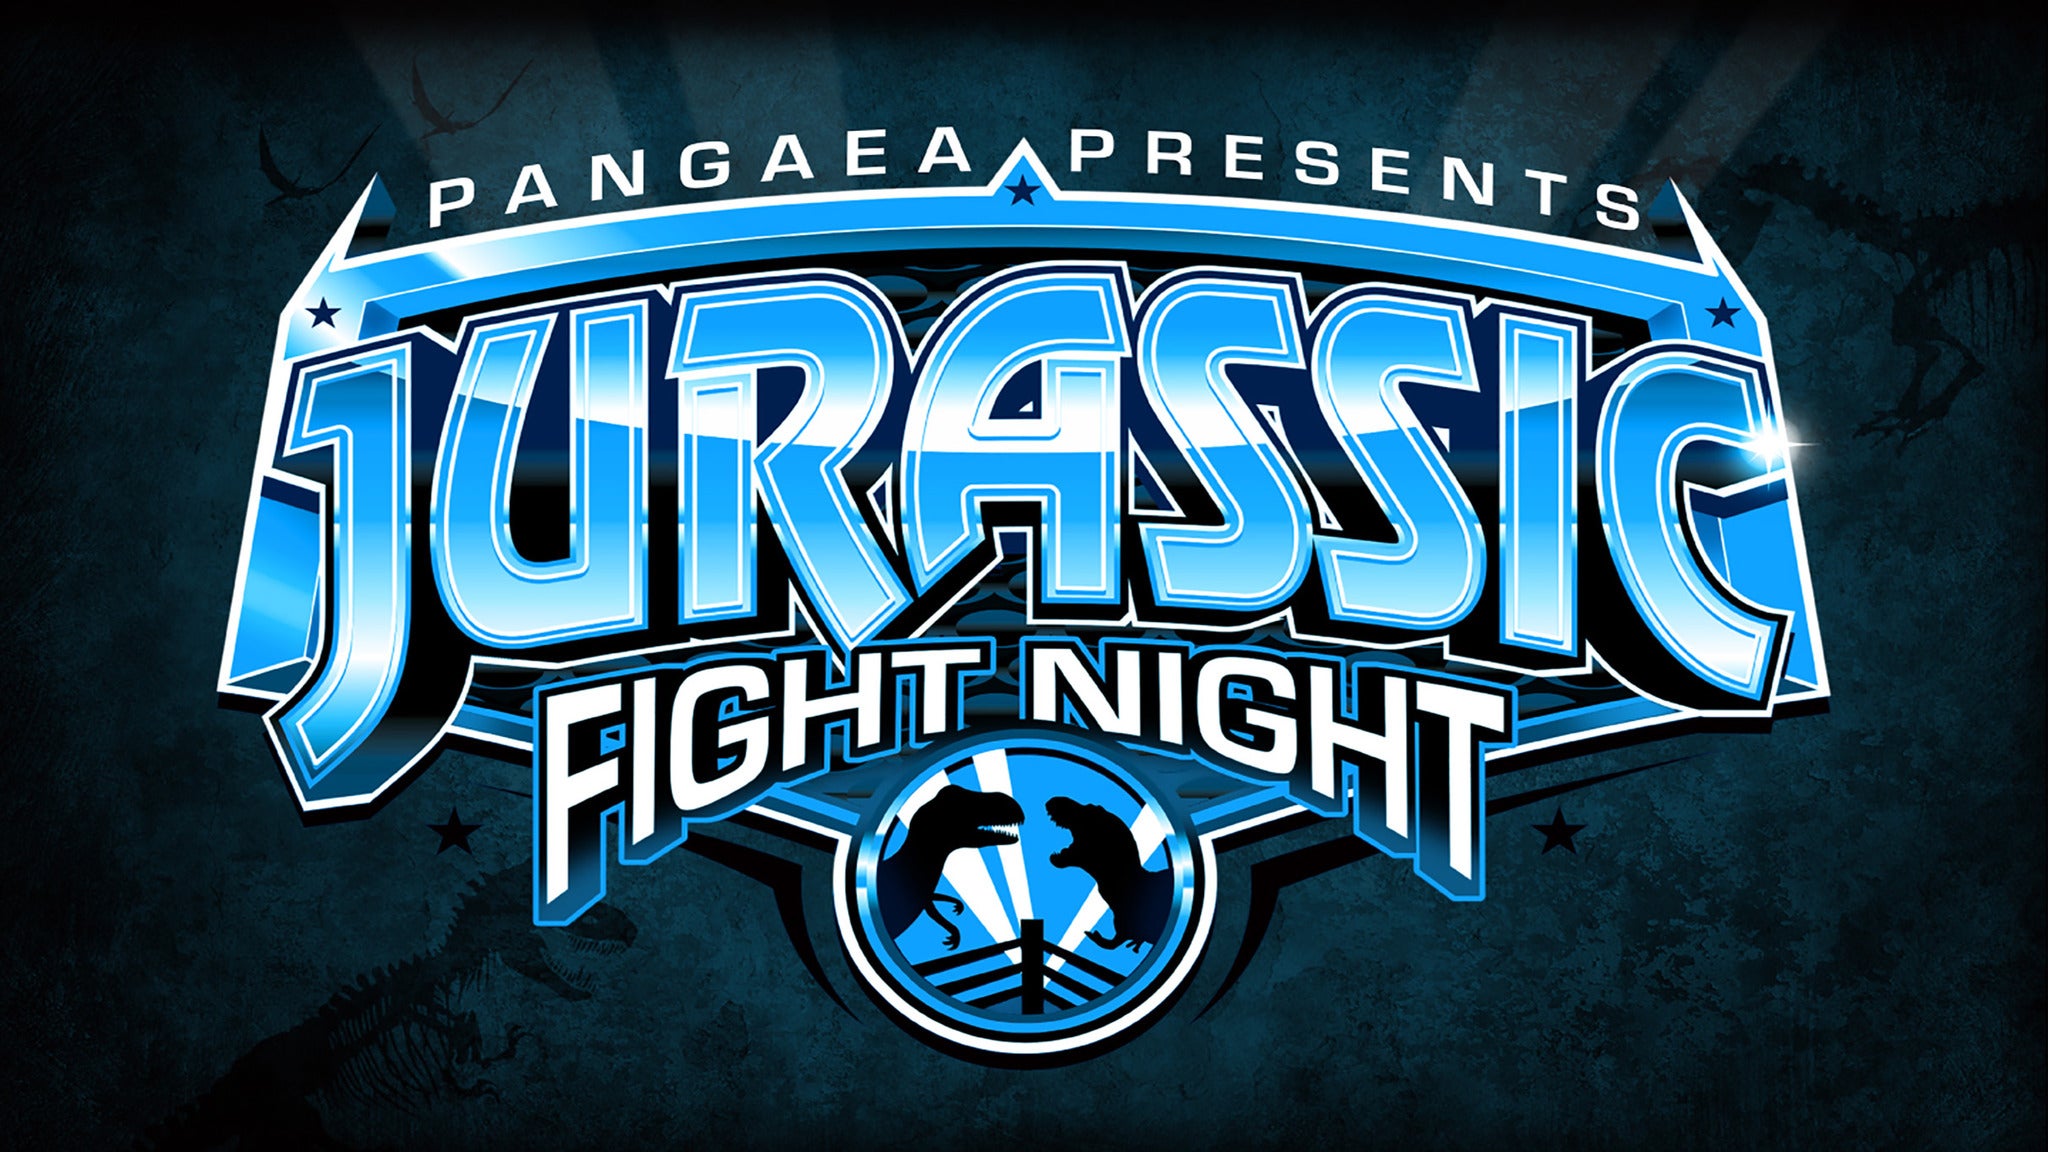 Jurassic Fight Night in Glendale promo photo for Presales presale offer code